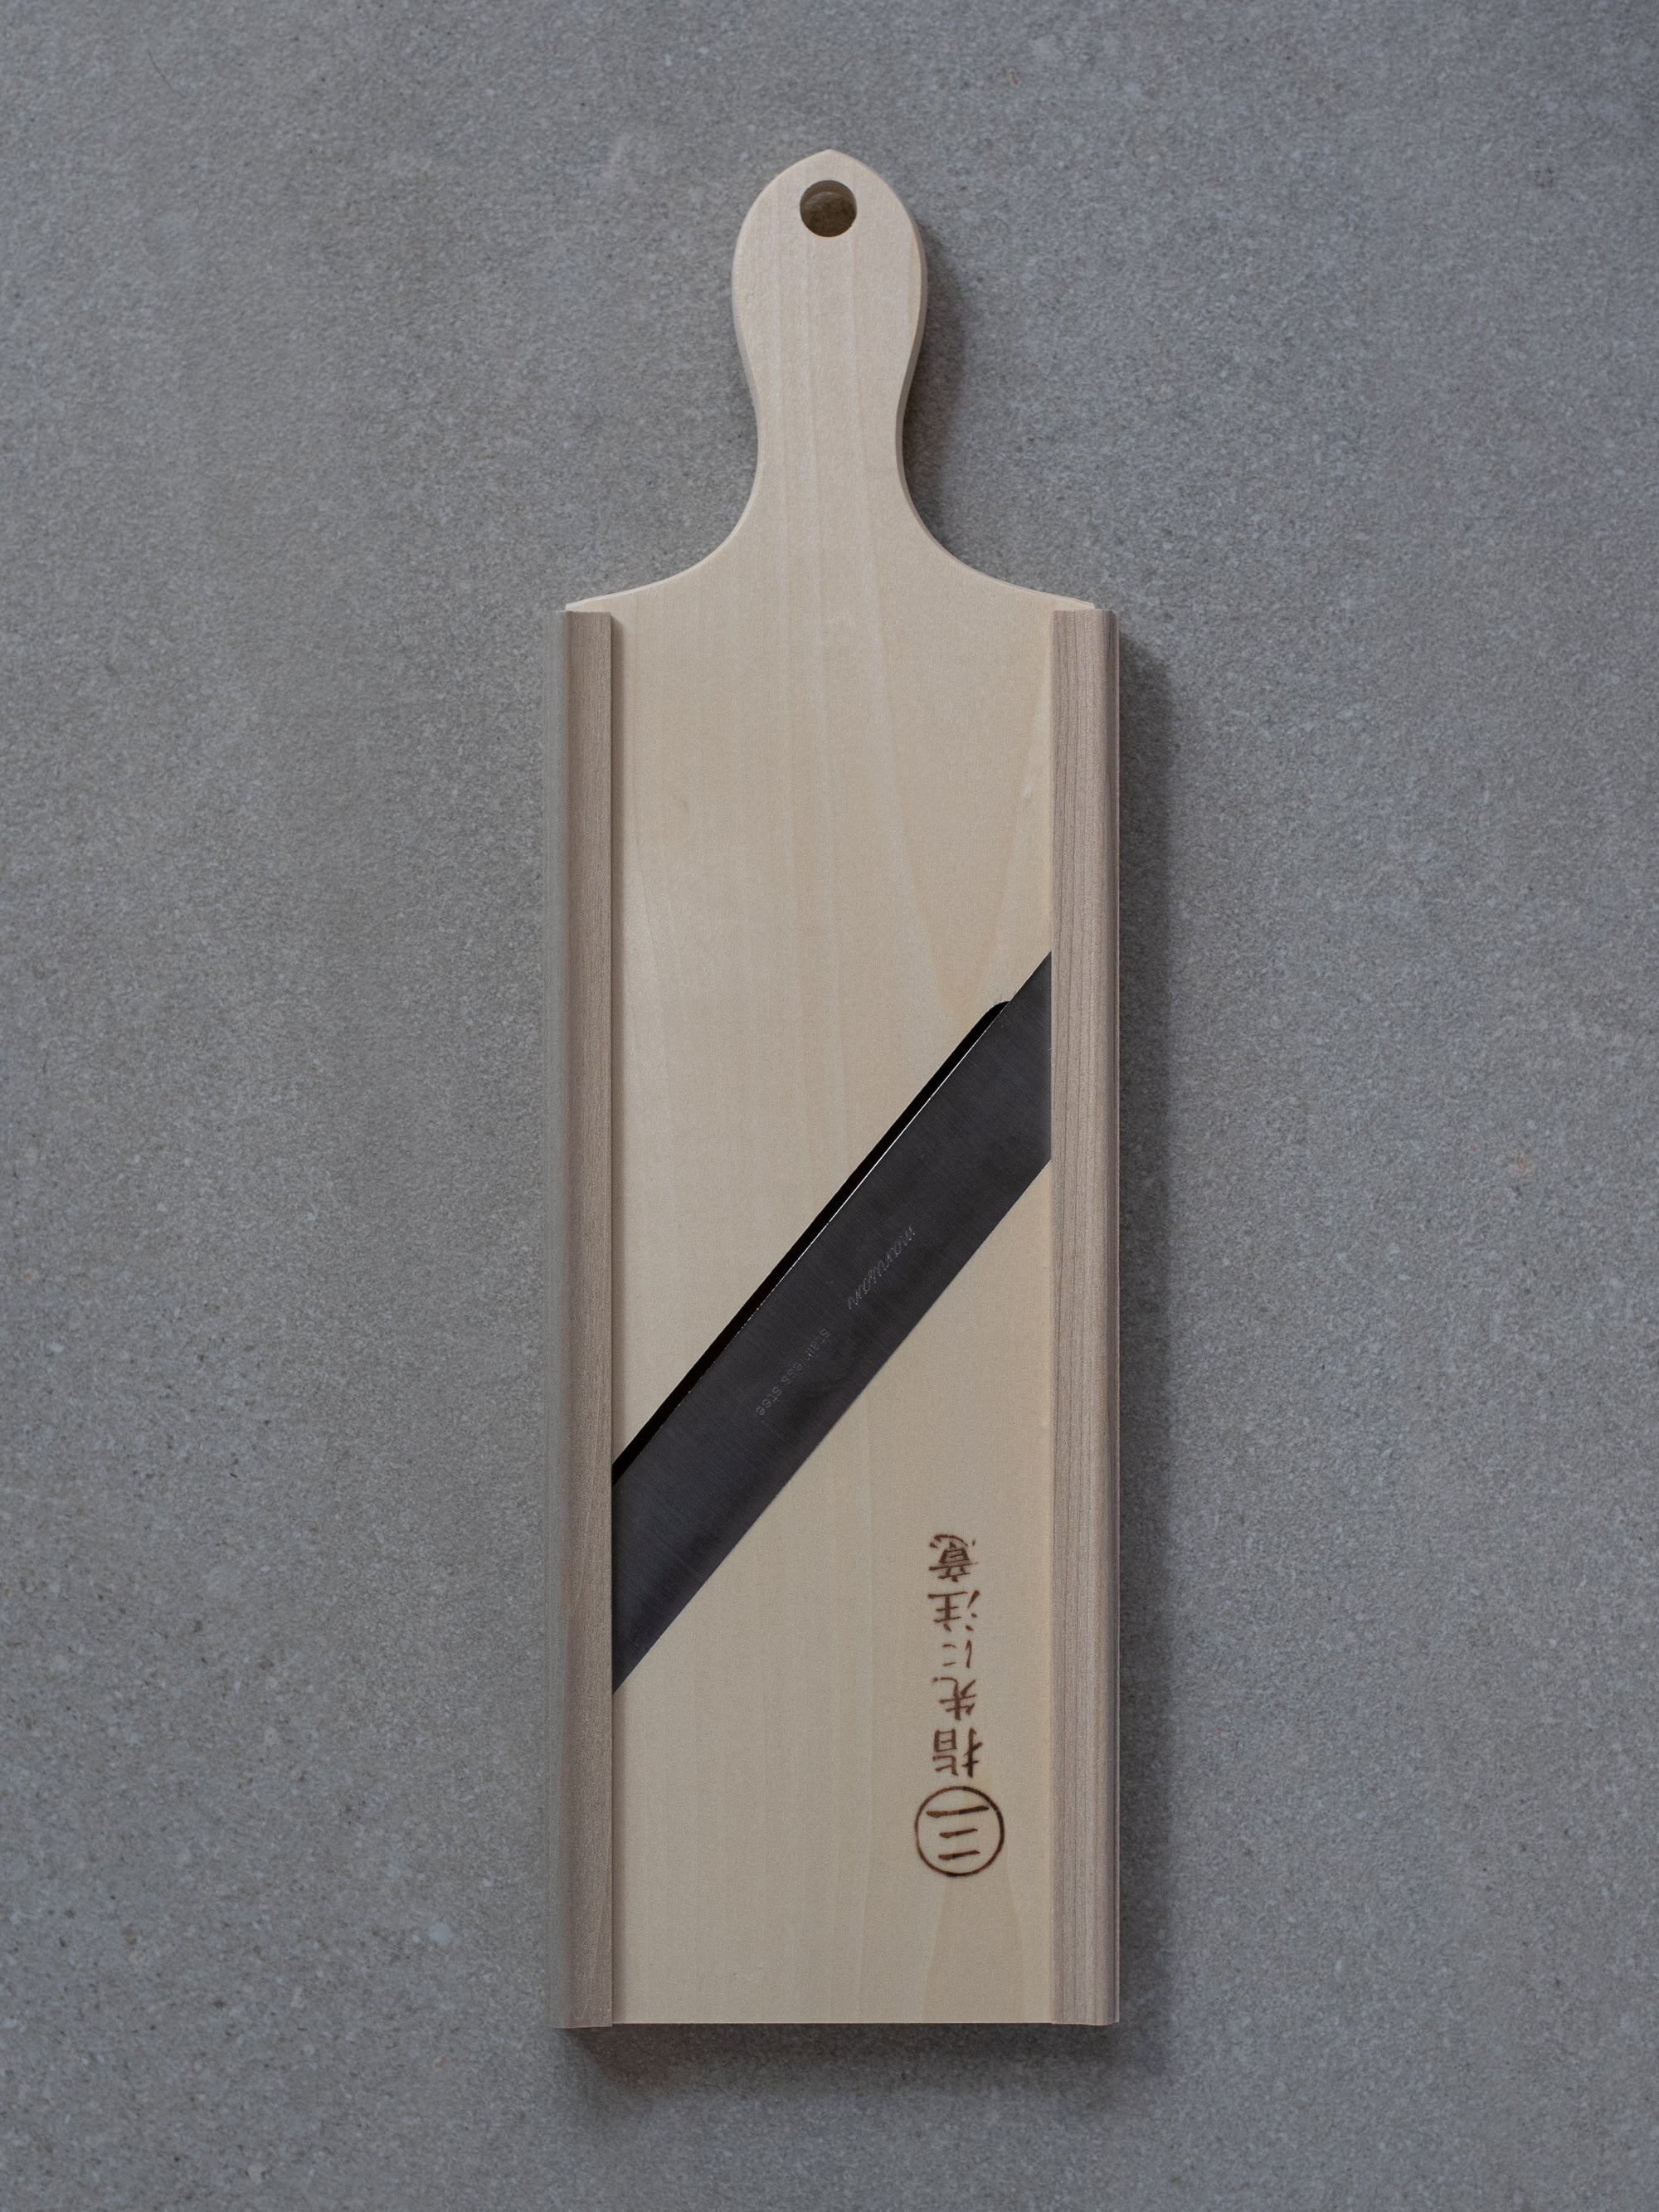 Japanese (Mandoline) Vegetable Slicer - 60mm Black – Yagihana Retail